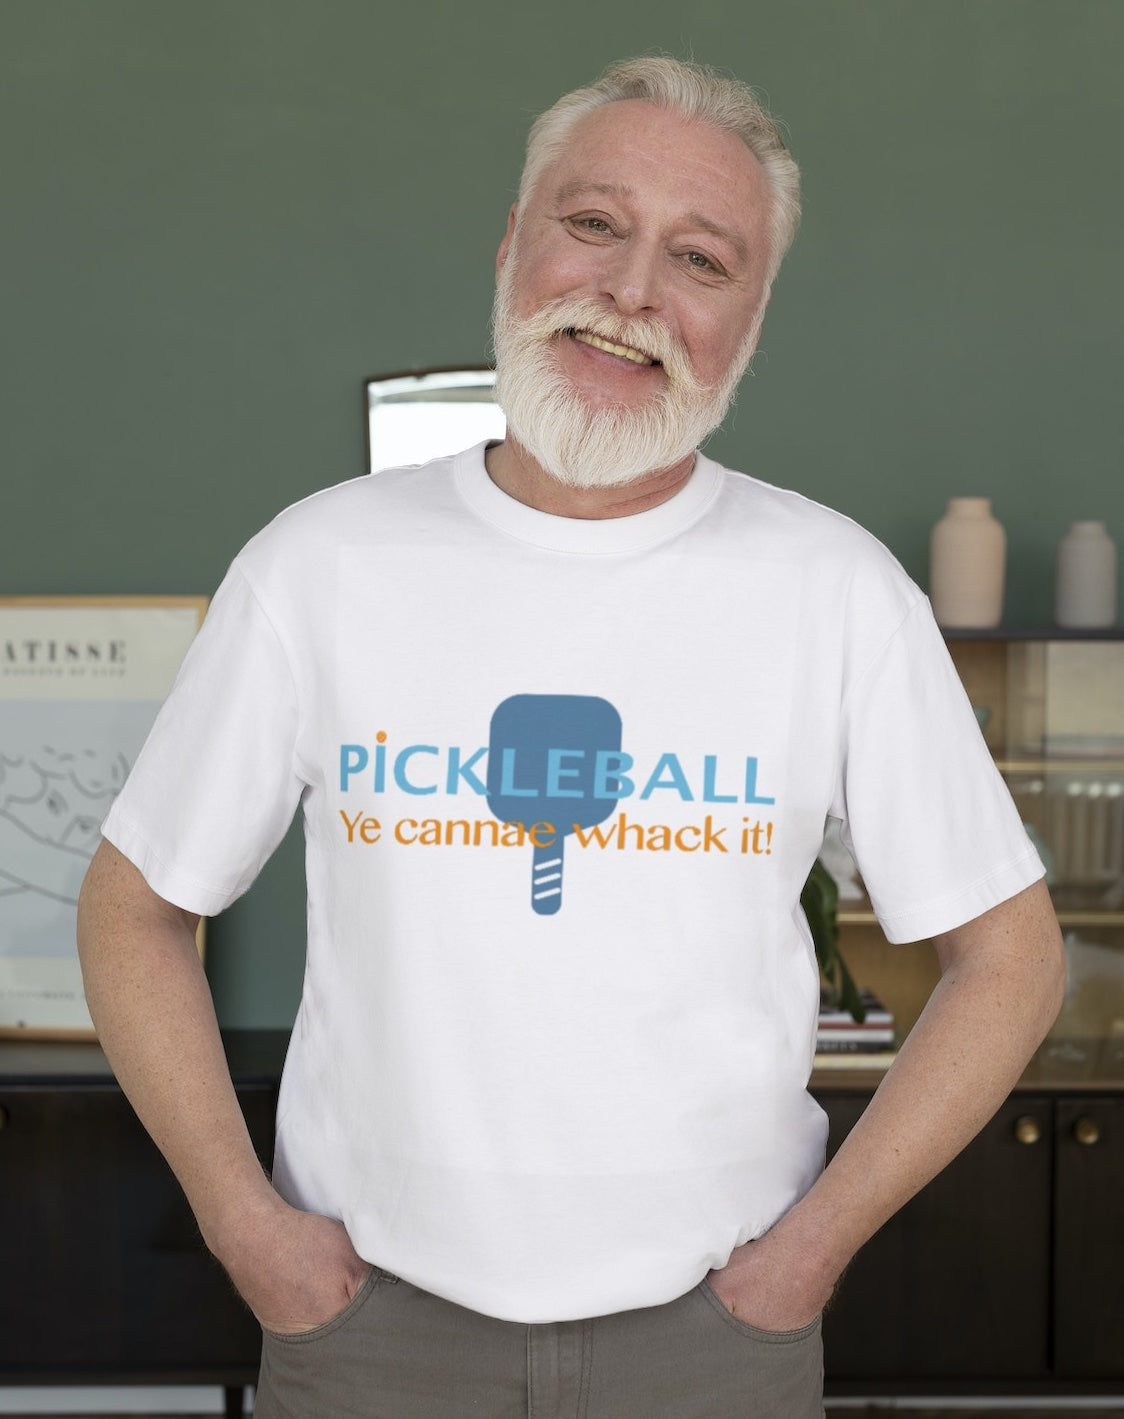 Pickleball T-Shirt - "Ye cannae whack it!" unisex heavy cotton in various sizes